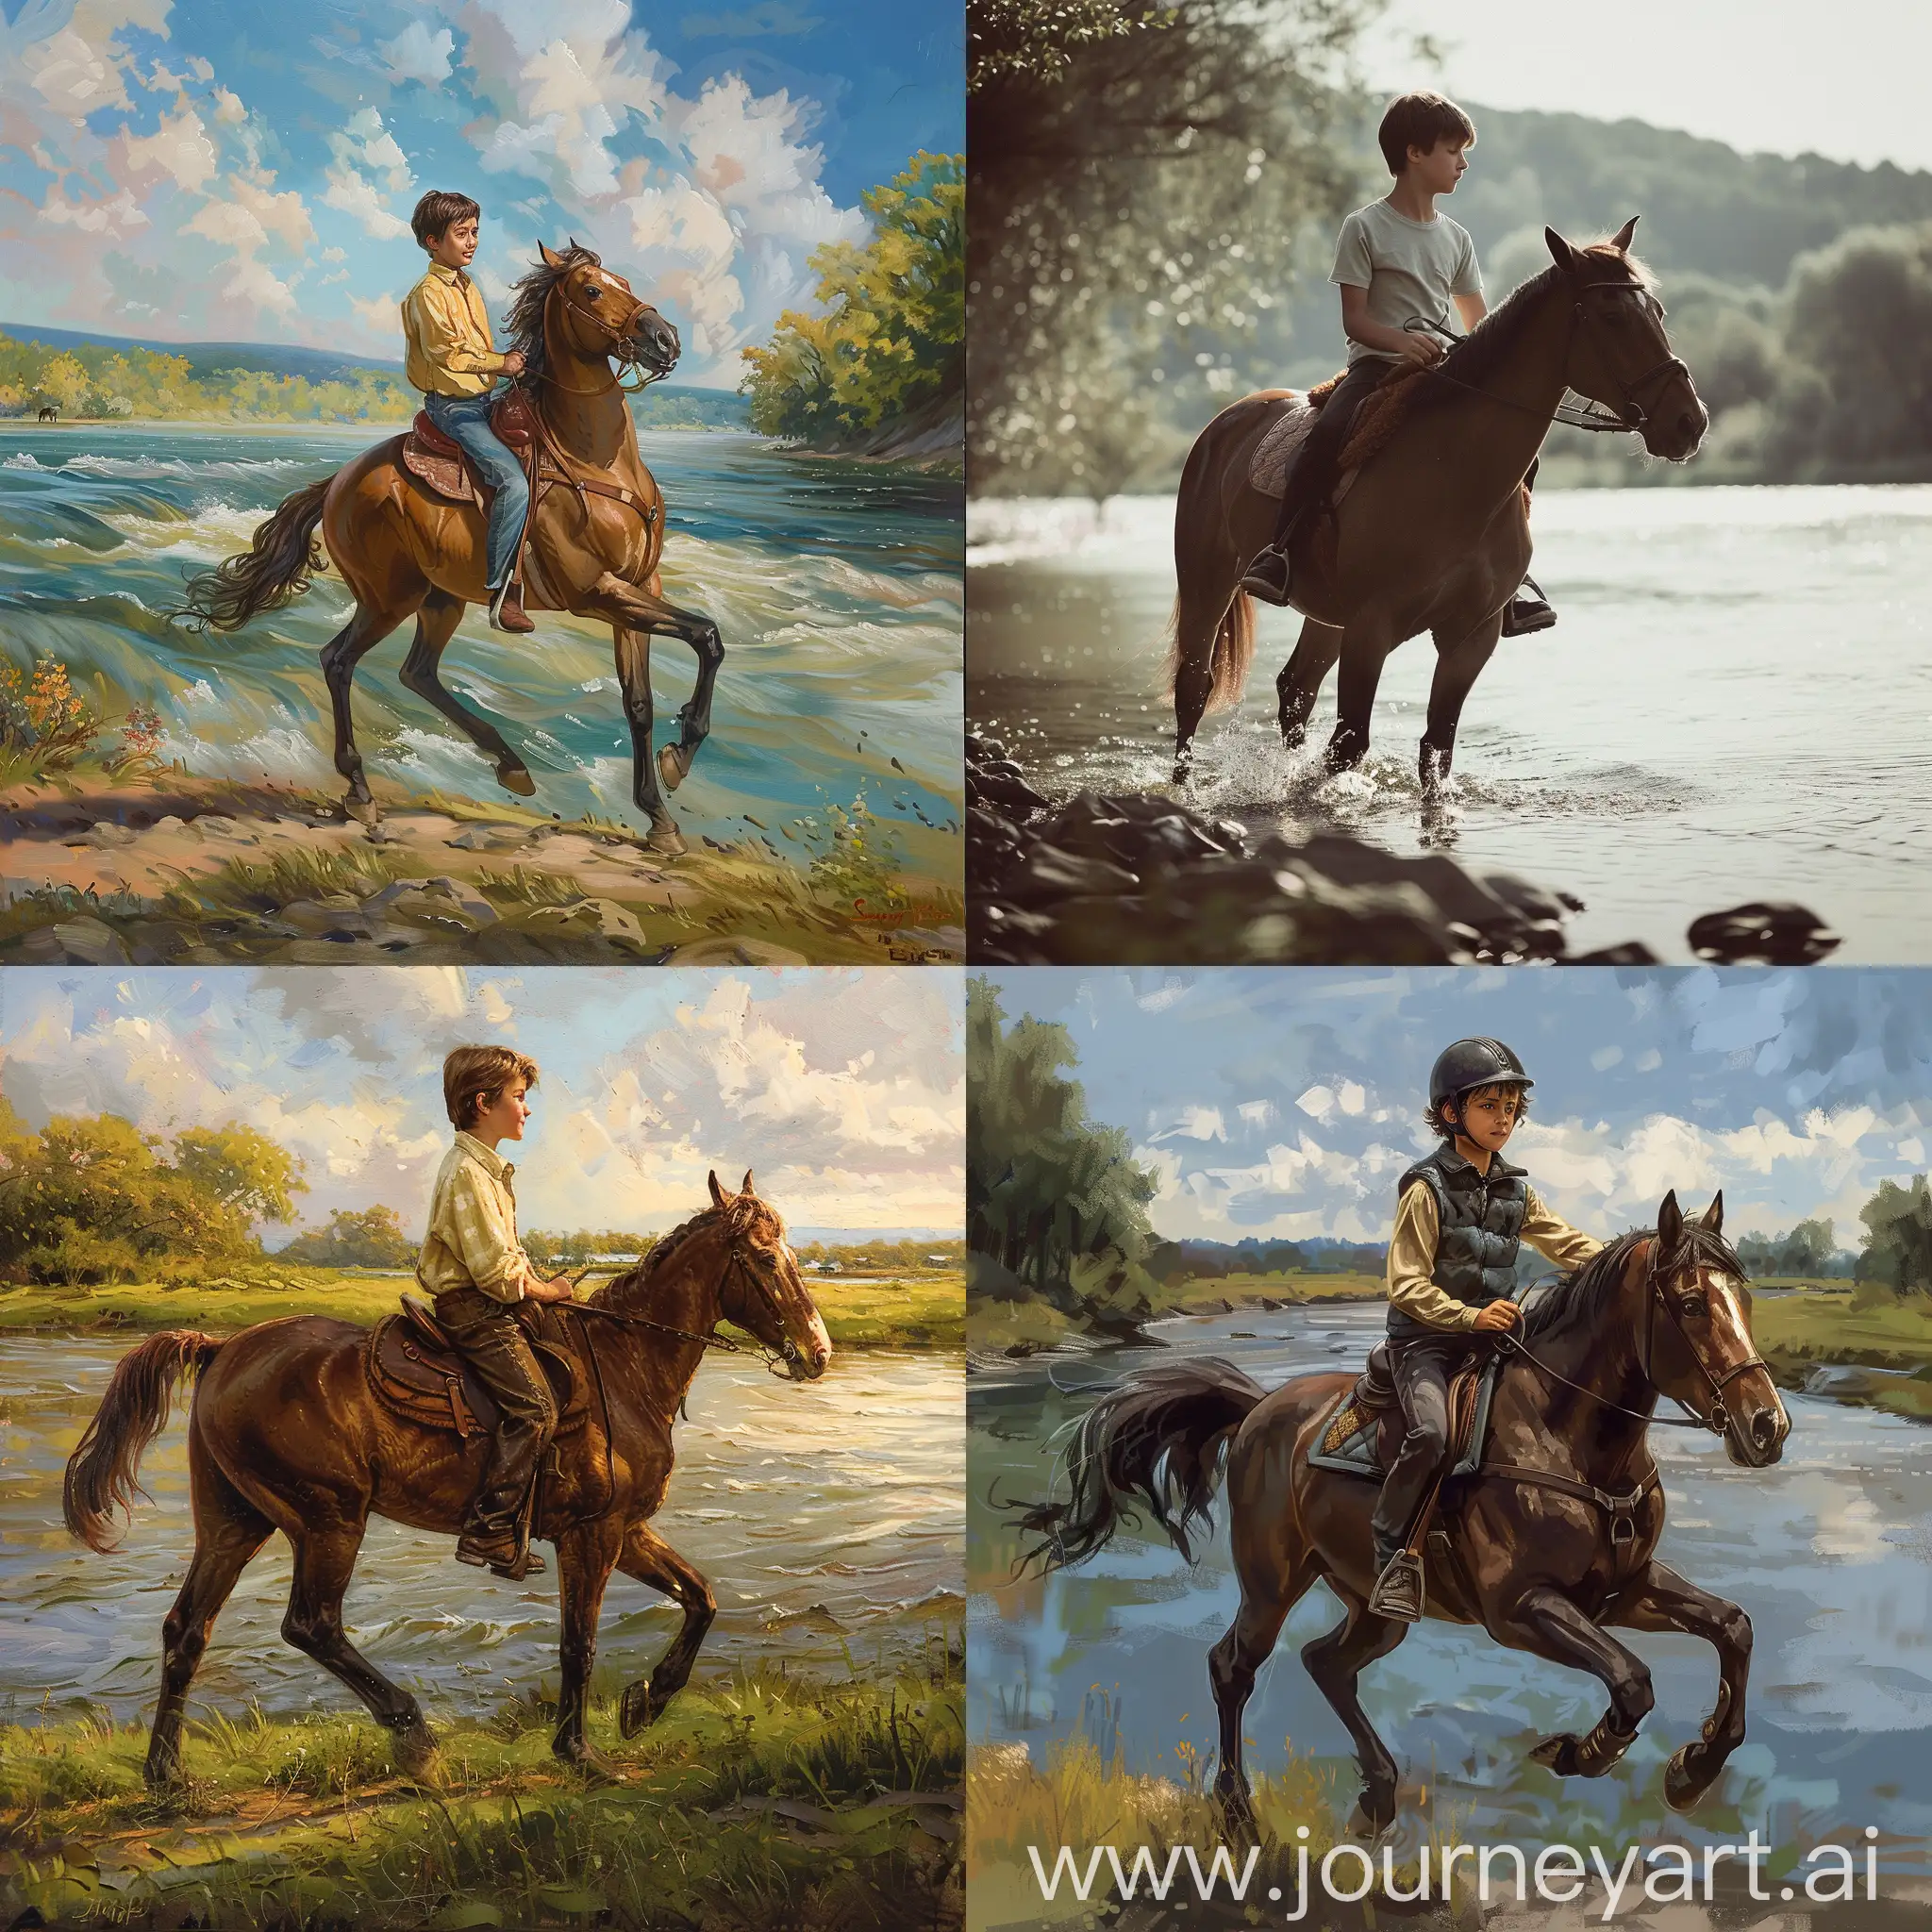 Adventurous-12YearOld-Riding-Horse-Along-Riverside